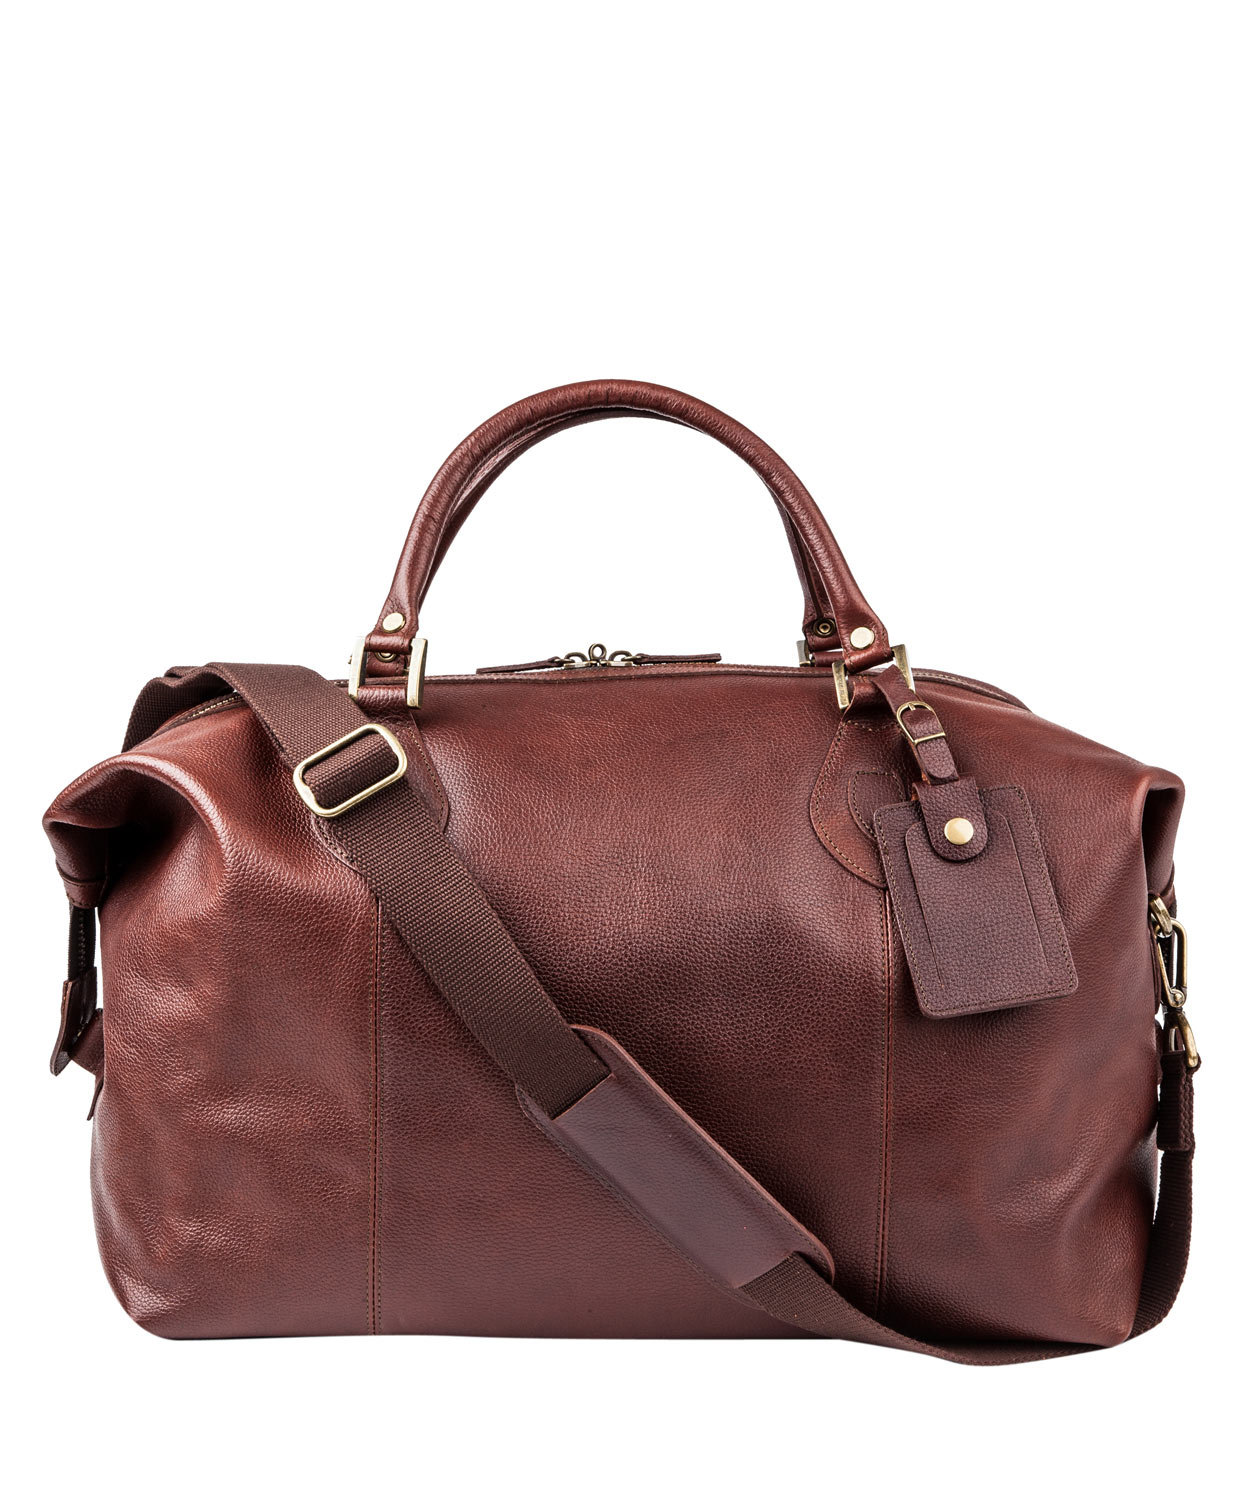 Barbour Leather Explorer Travel Bag in Brown for Men - Lyst